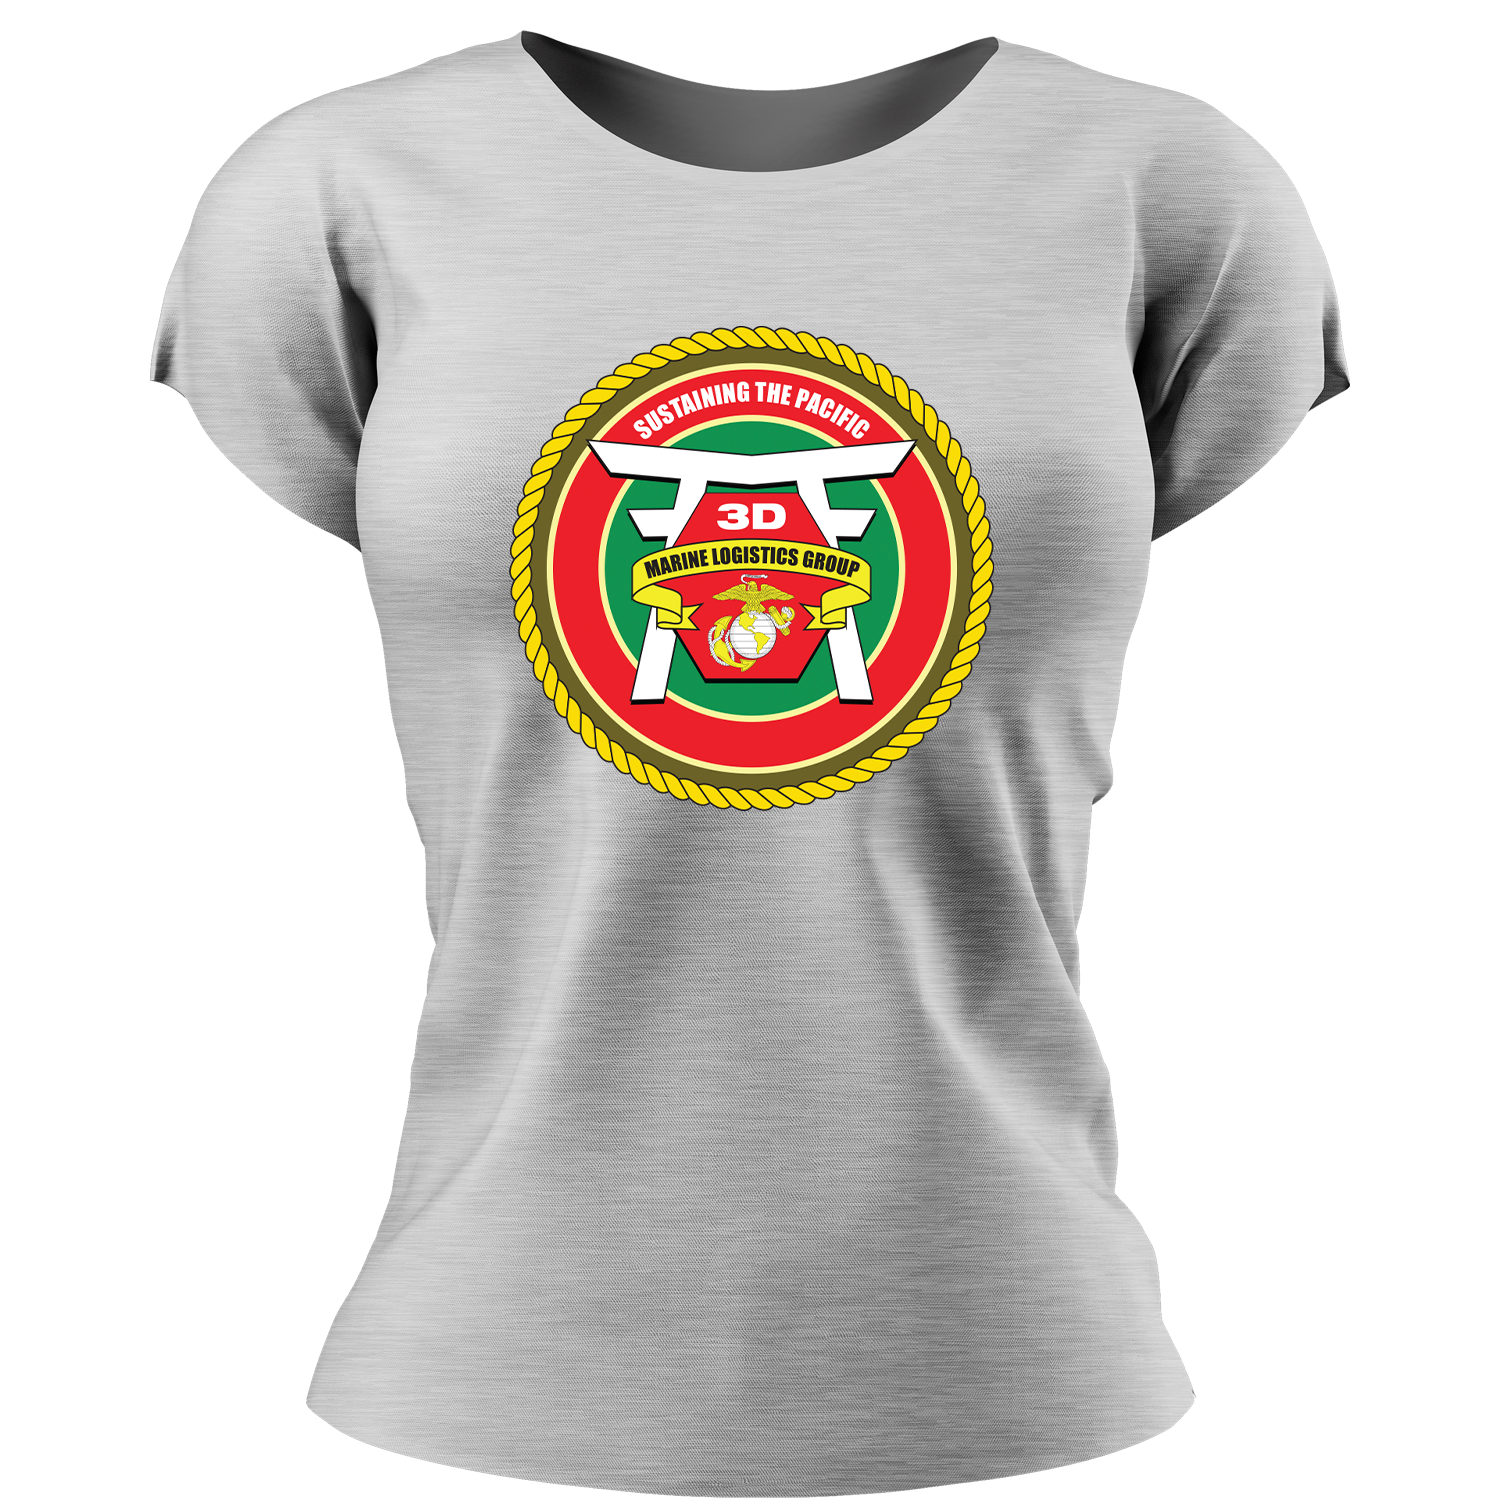 3D Marine Logistics Group (3D MLG) Women's Unit T-Shirt